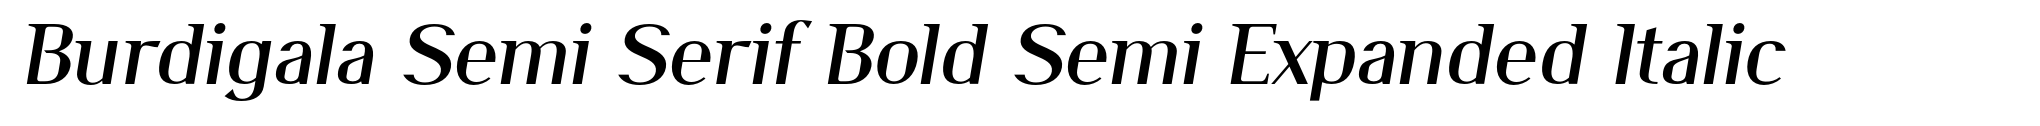 Burdigala Semi Serif Bold Semi Expanded Italic image